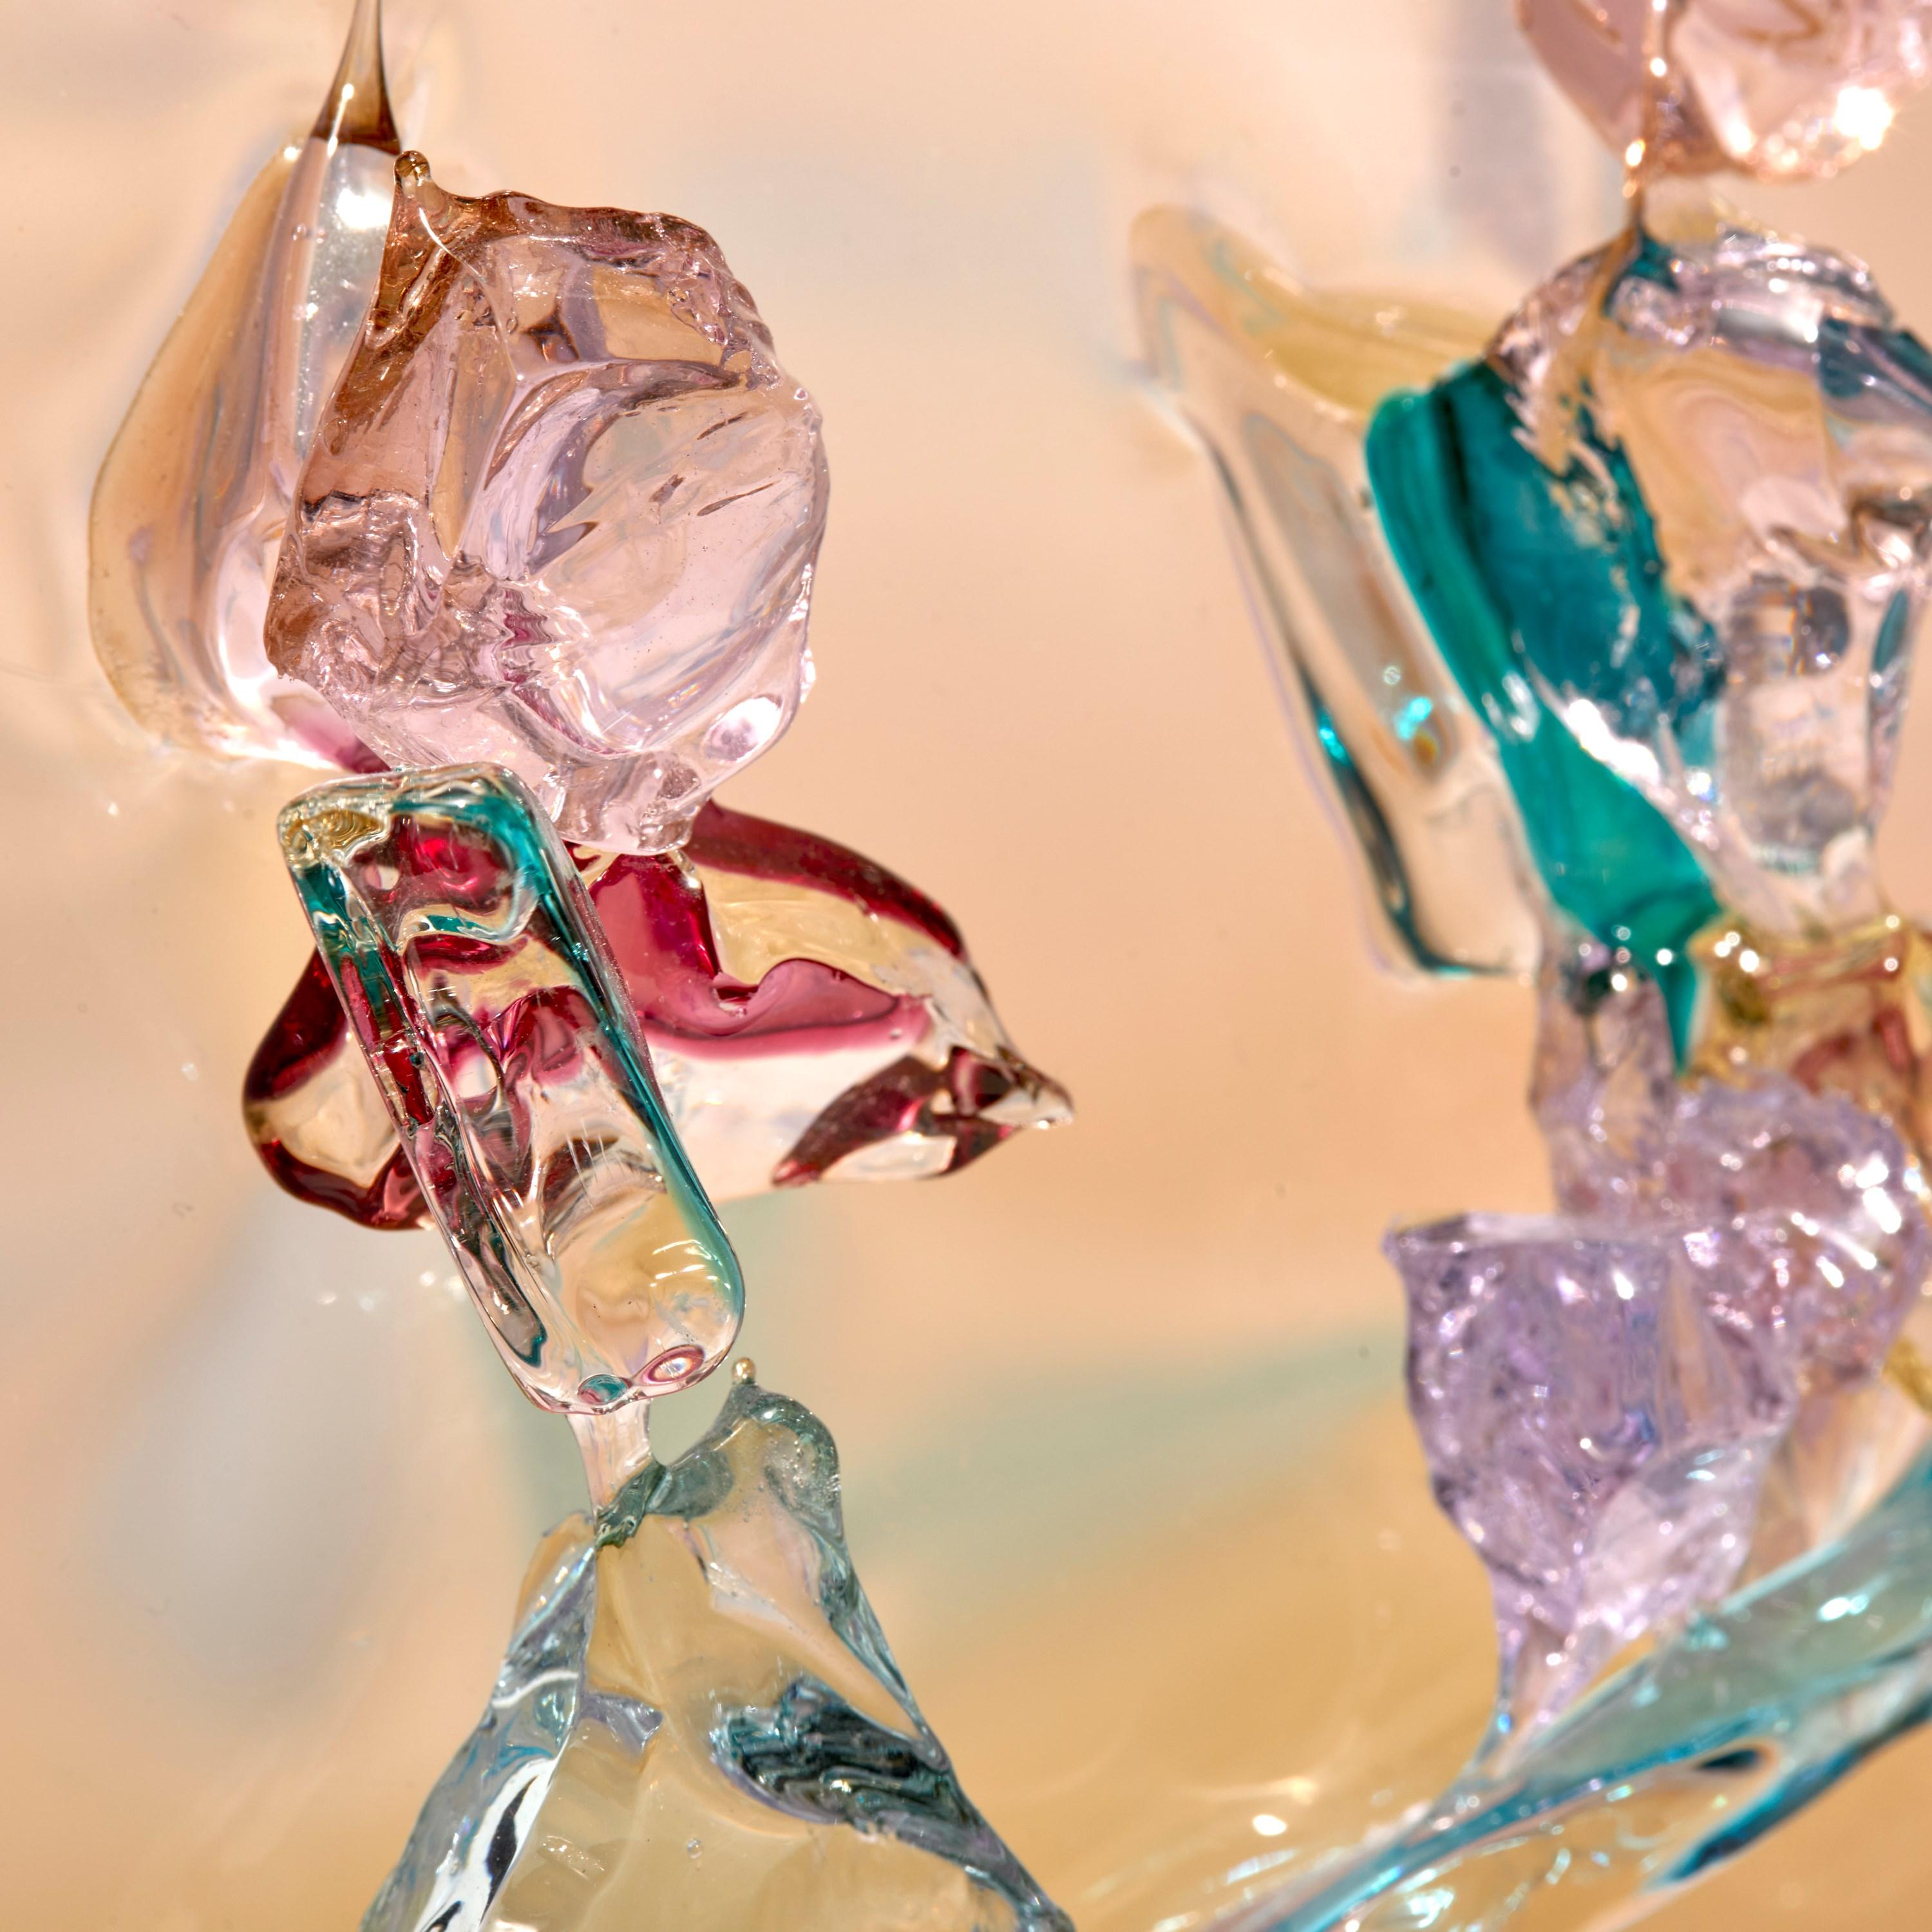 Blown Glass Sakura TRP21015, a Glass Vase in Corals with Mixed Colors by Maarten Vrolijk For Sale